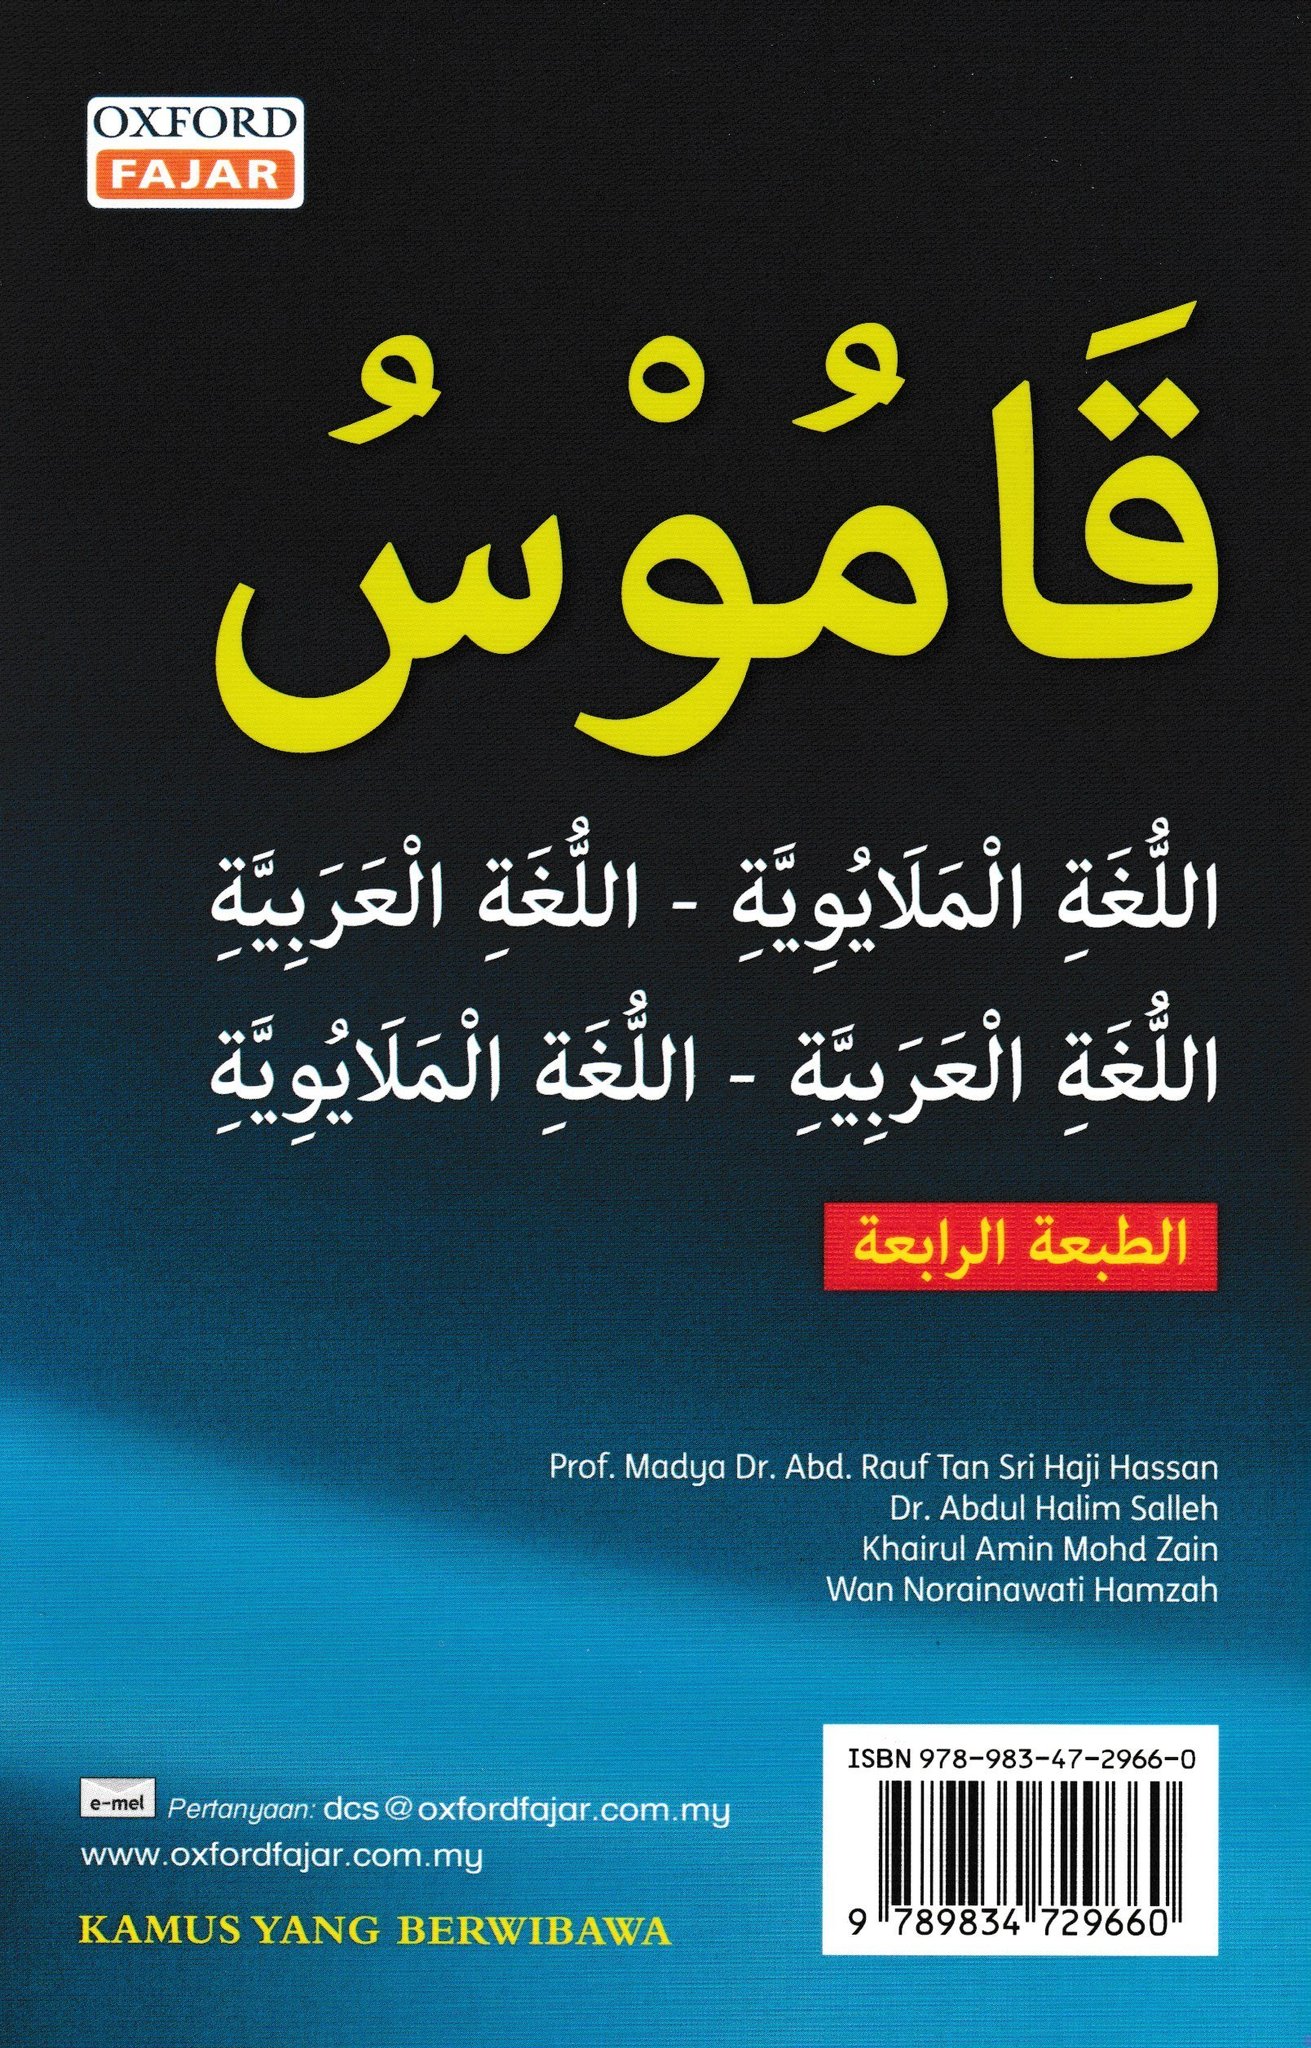 Oxfordfajar Melayu Malay Language Dictionary Arabic Arabic Melayu Malay 4th Edition With Cd Shopee Singapore